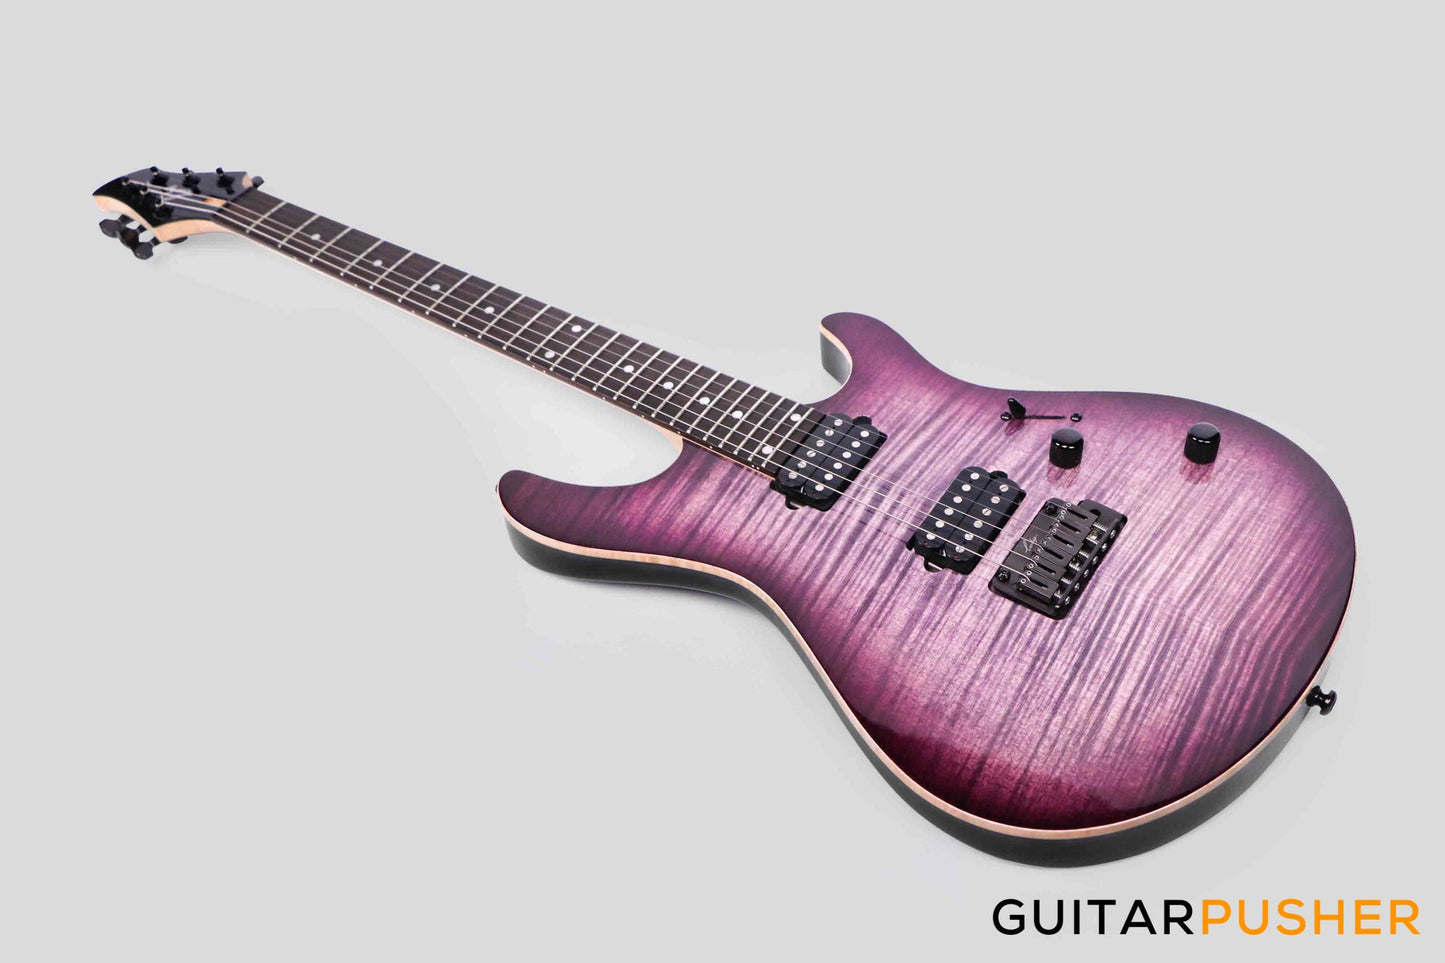 Leeky R-Series R25 Electric Guitar (Flamed Maple Top/Rosewood Fingerboard) - Violet Burst